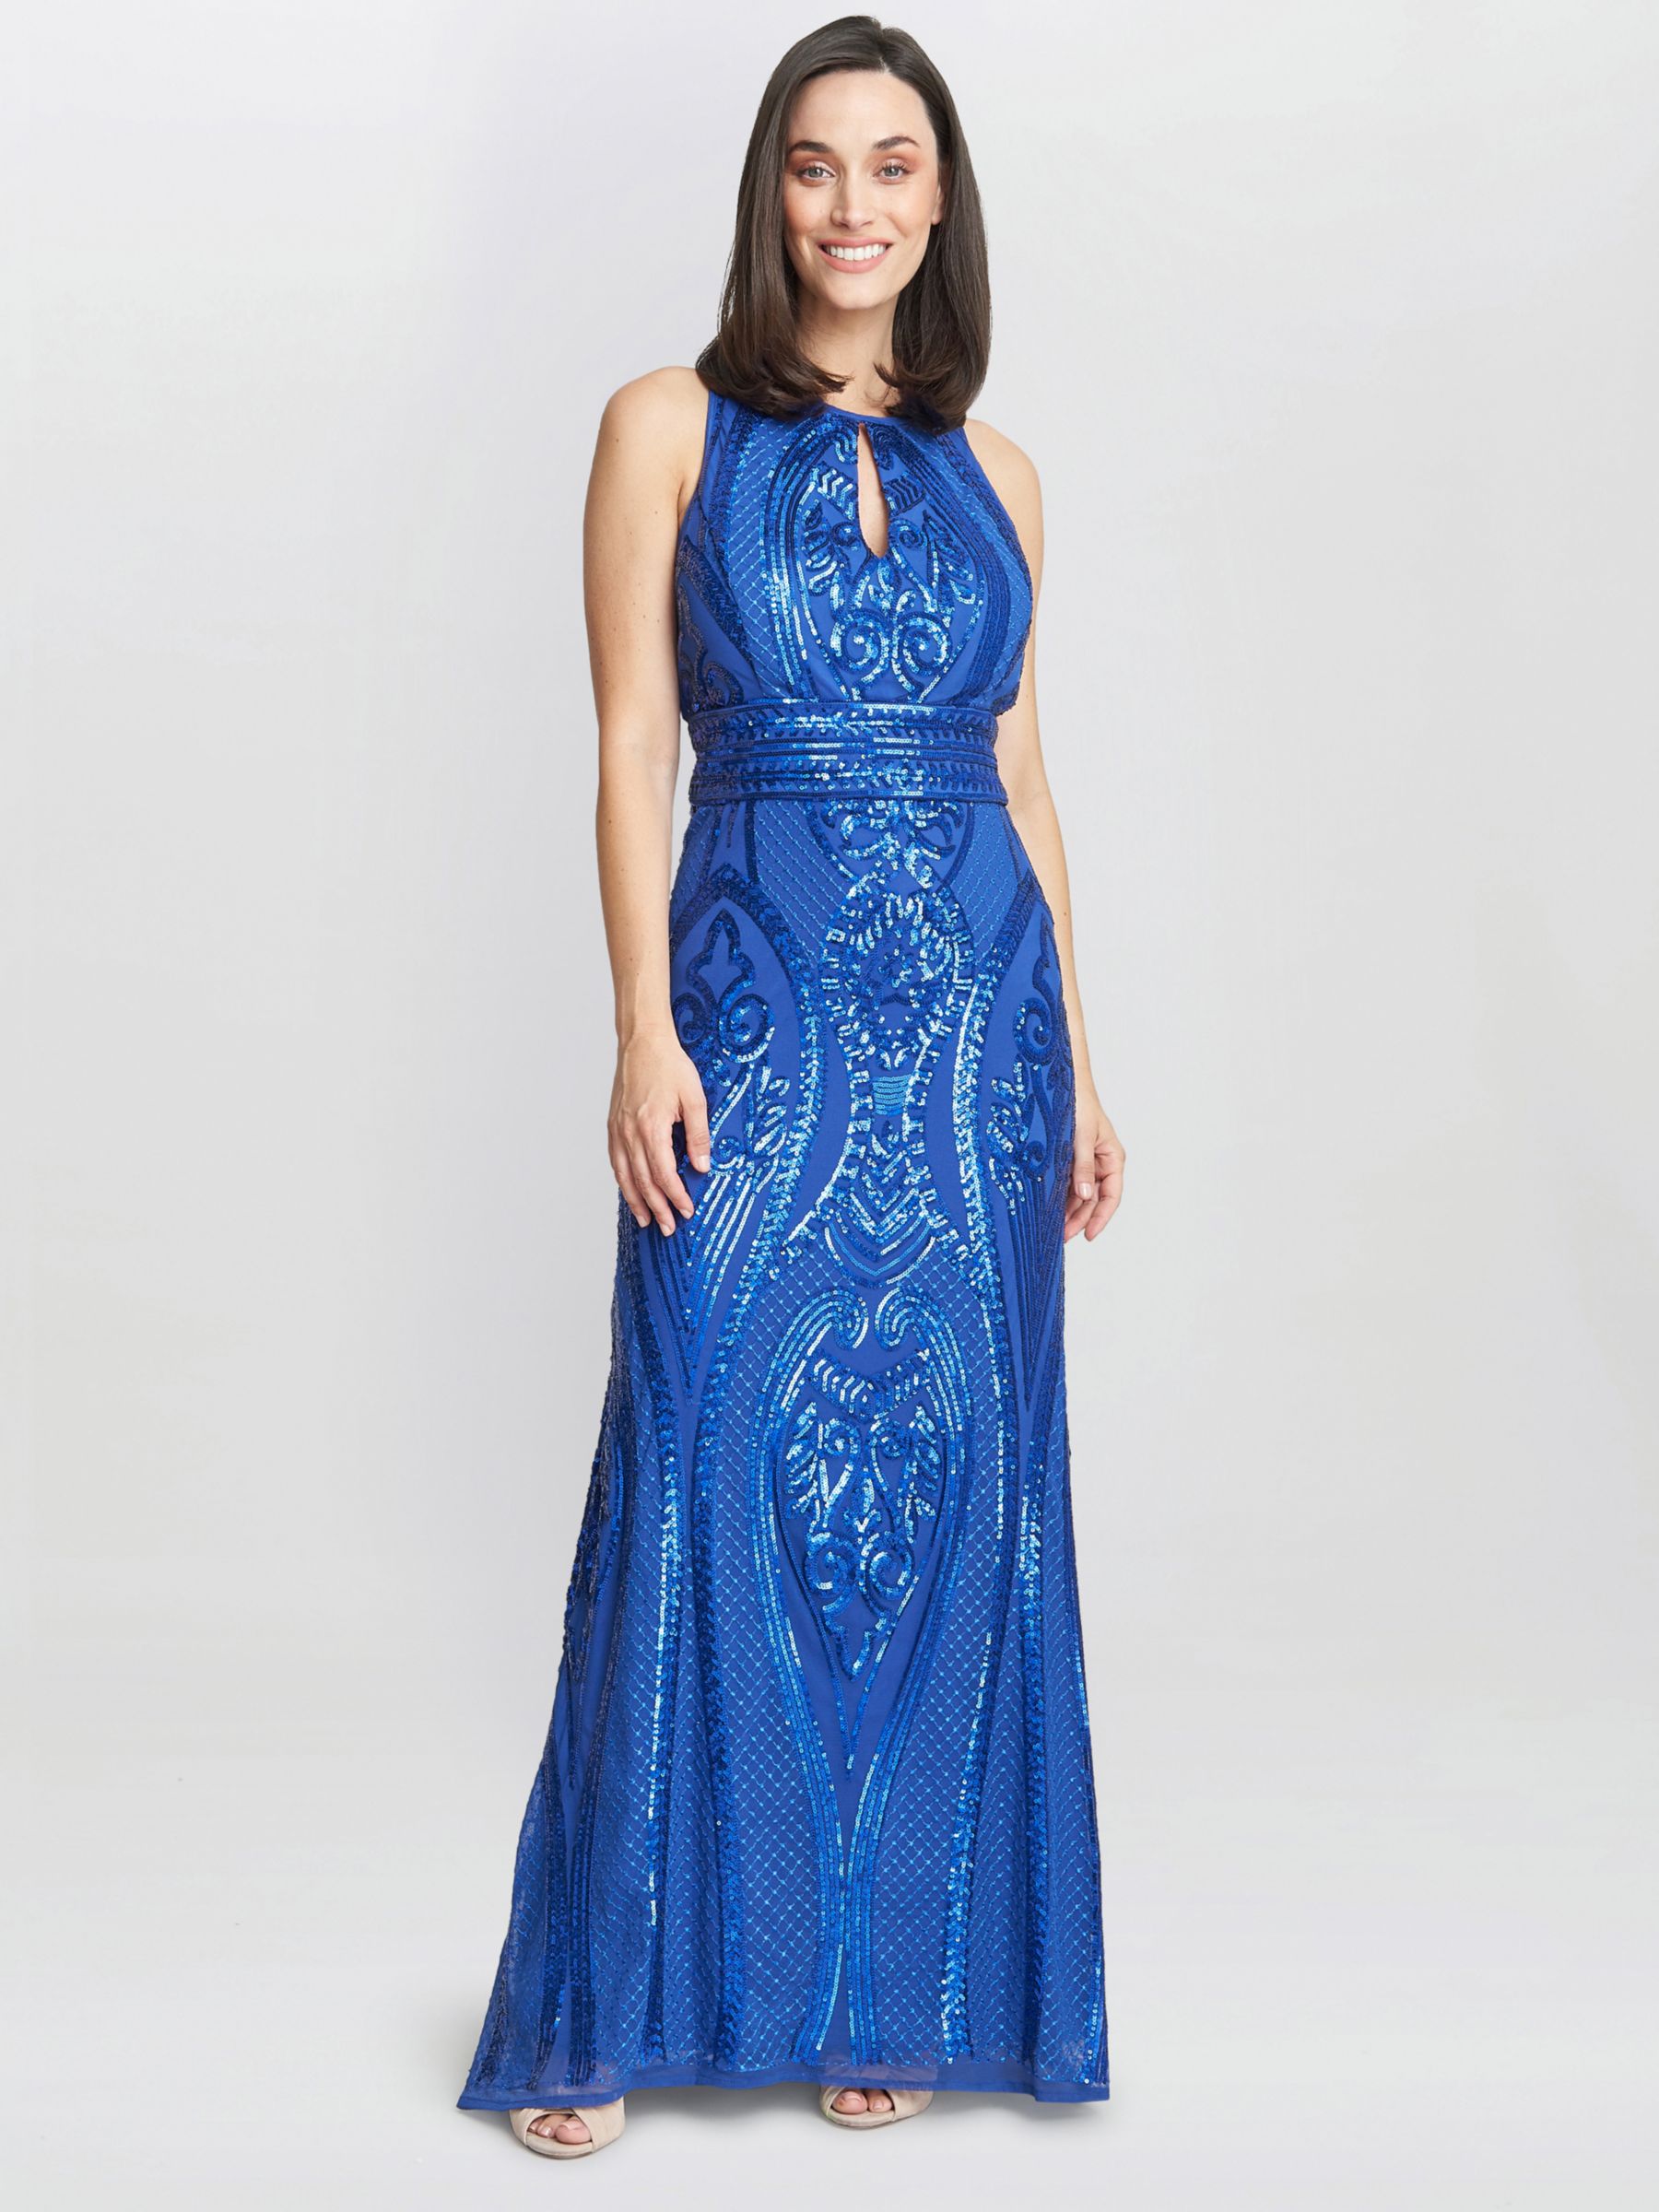 Gina Bacconi Natalie Sequin Bead Maxi Dress, Royal Blue